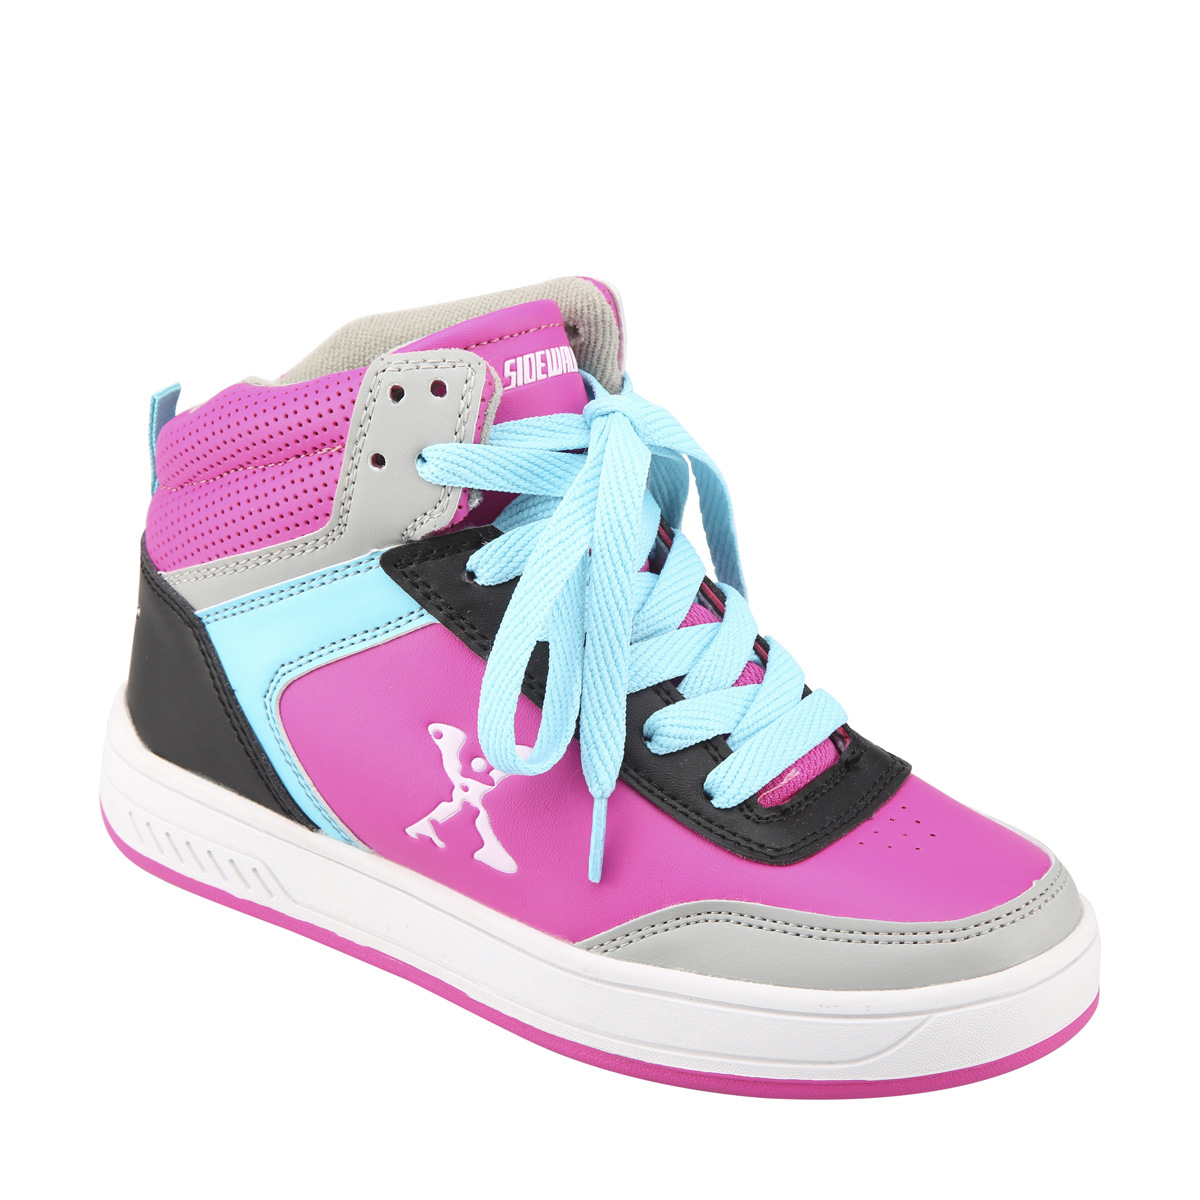 Sidewalk Sports Size 5 Pink Skate Shoes